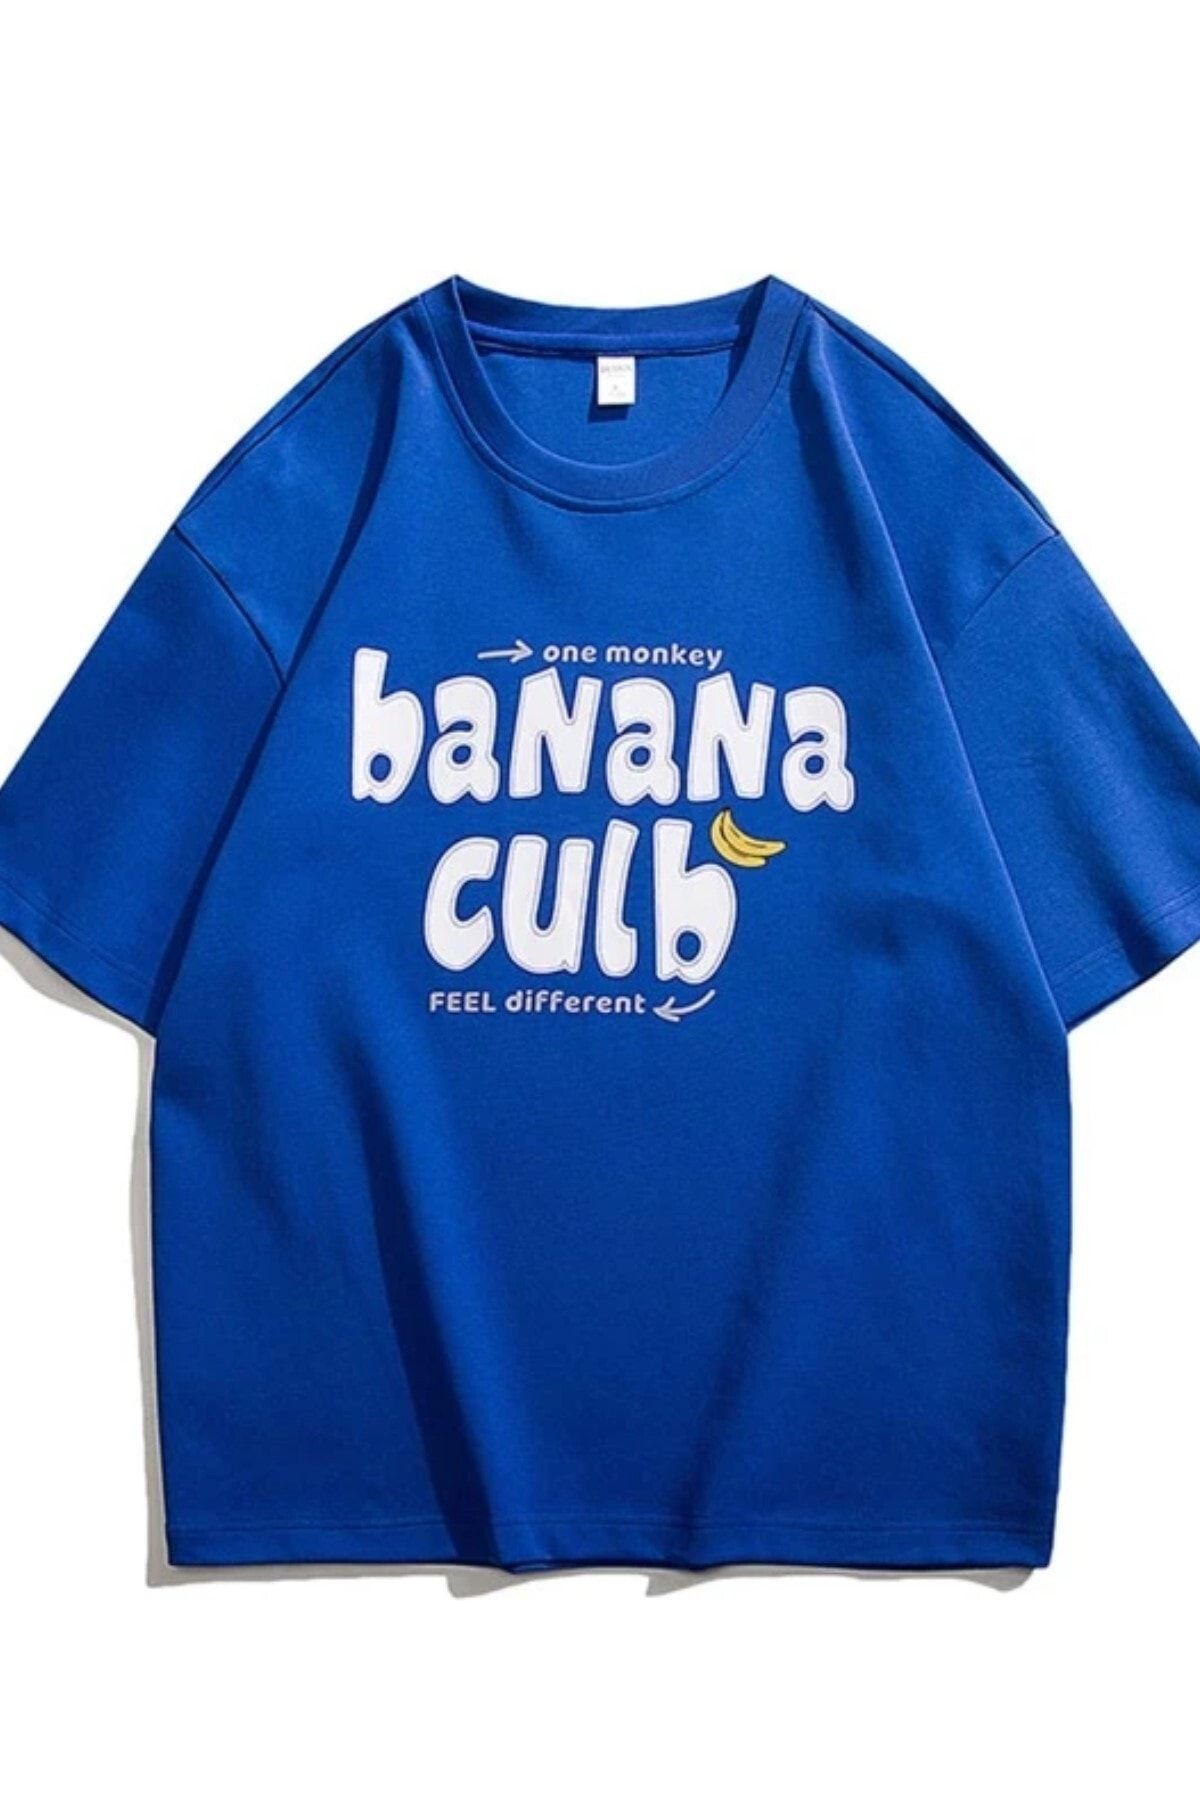 MODAGEN Unisex Sax Mavi Banana Culb Baskılı Oversize T-shirt